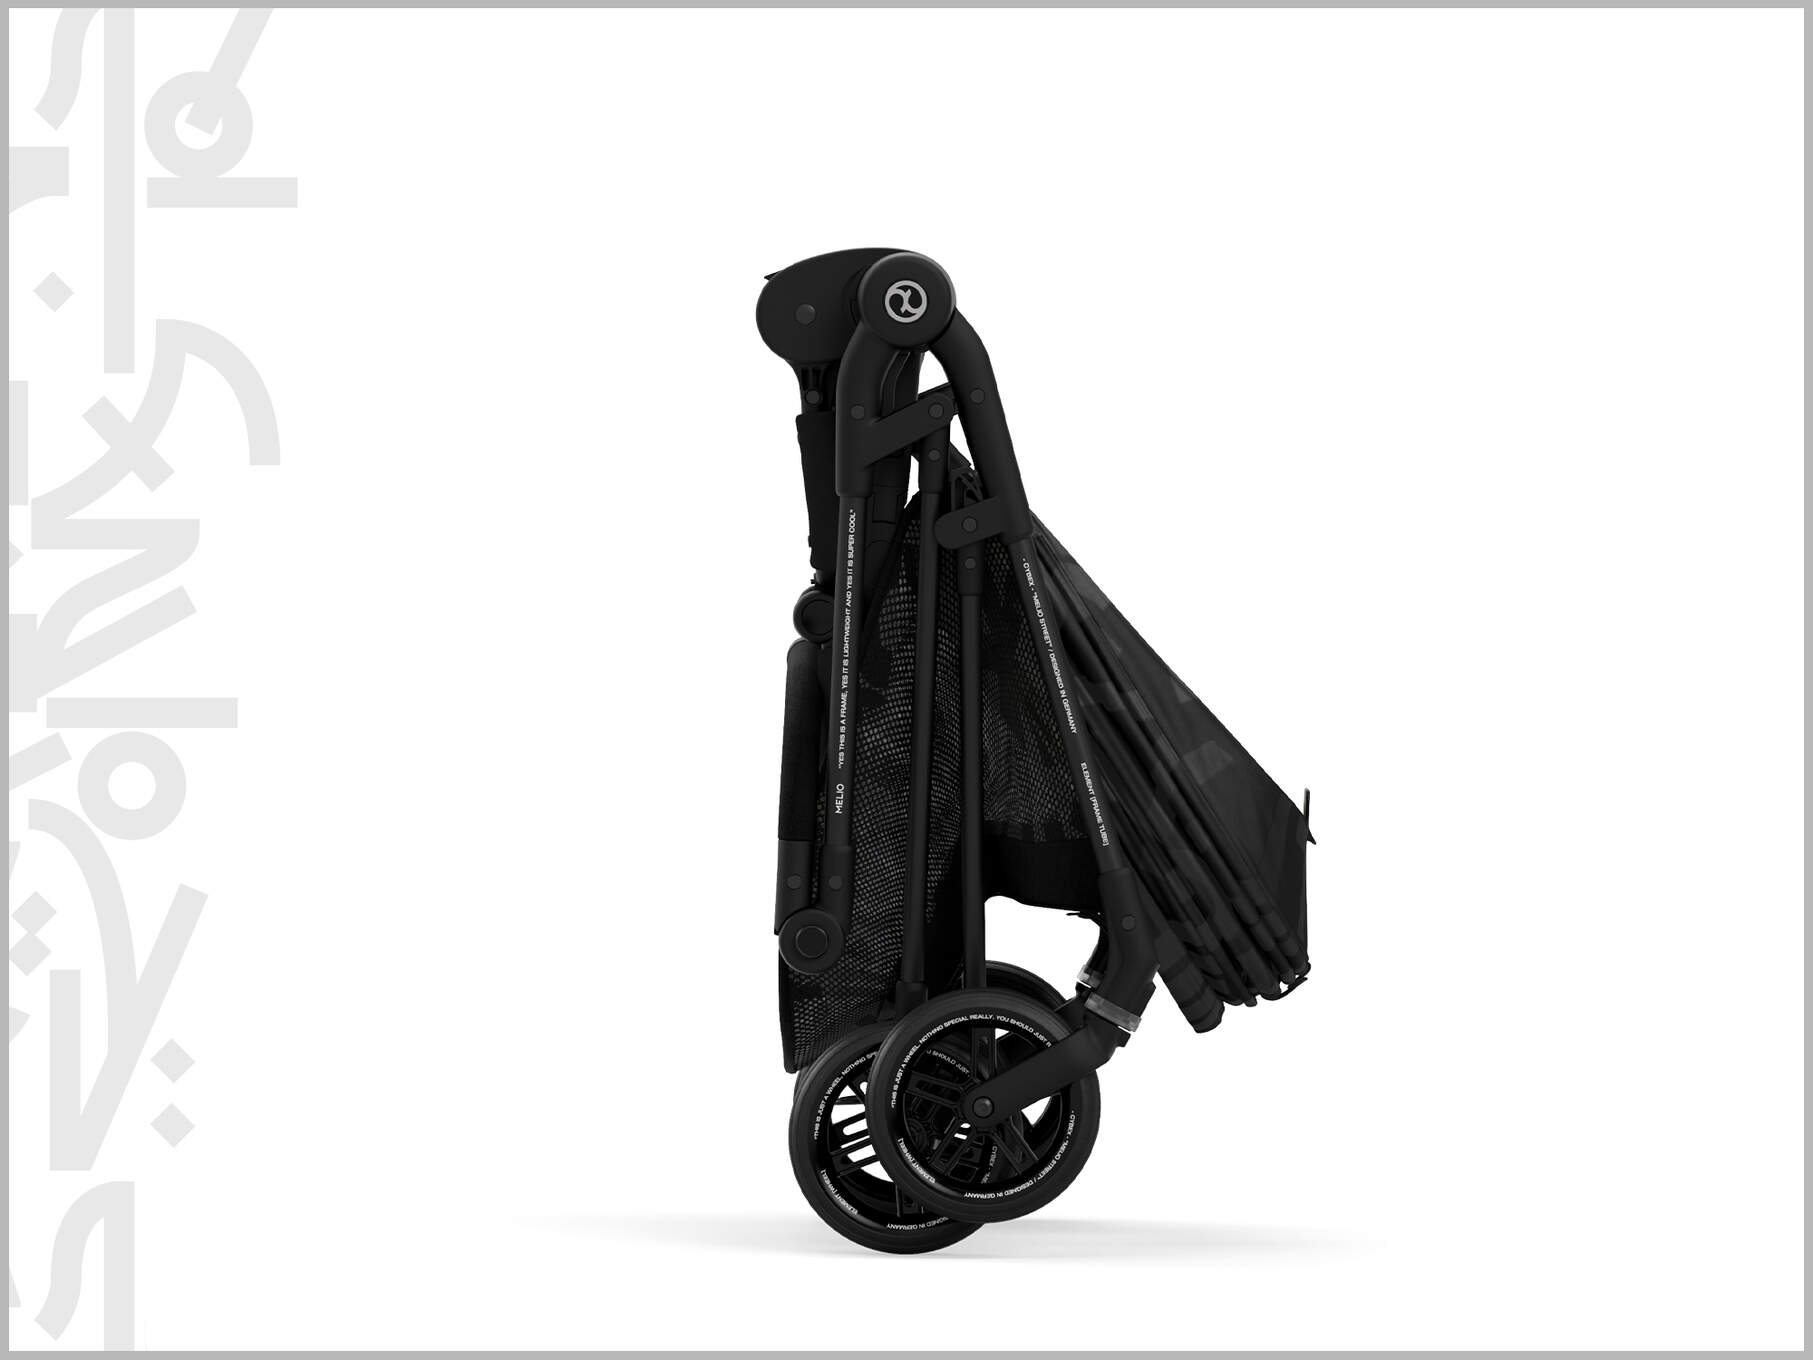 Cybex Gold Melio Street Stroller – kompakt ihopfällning